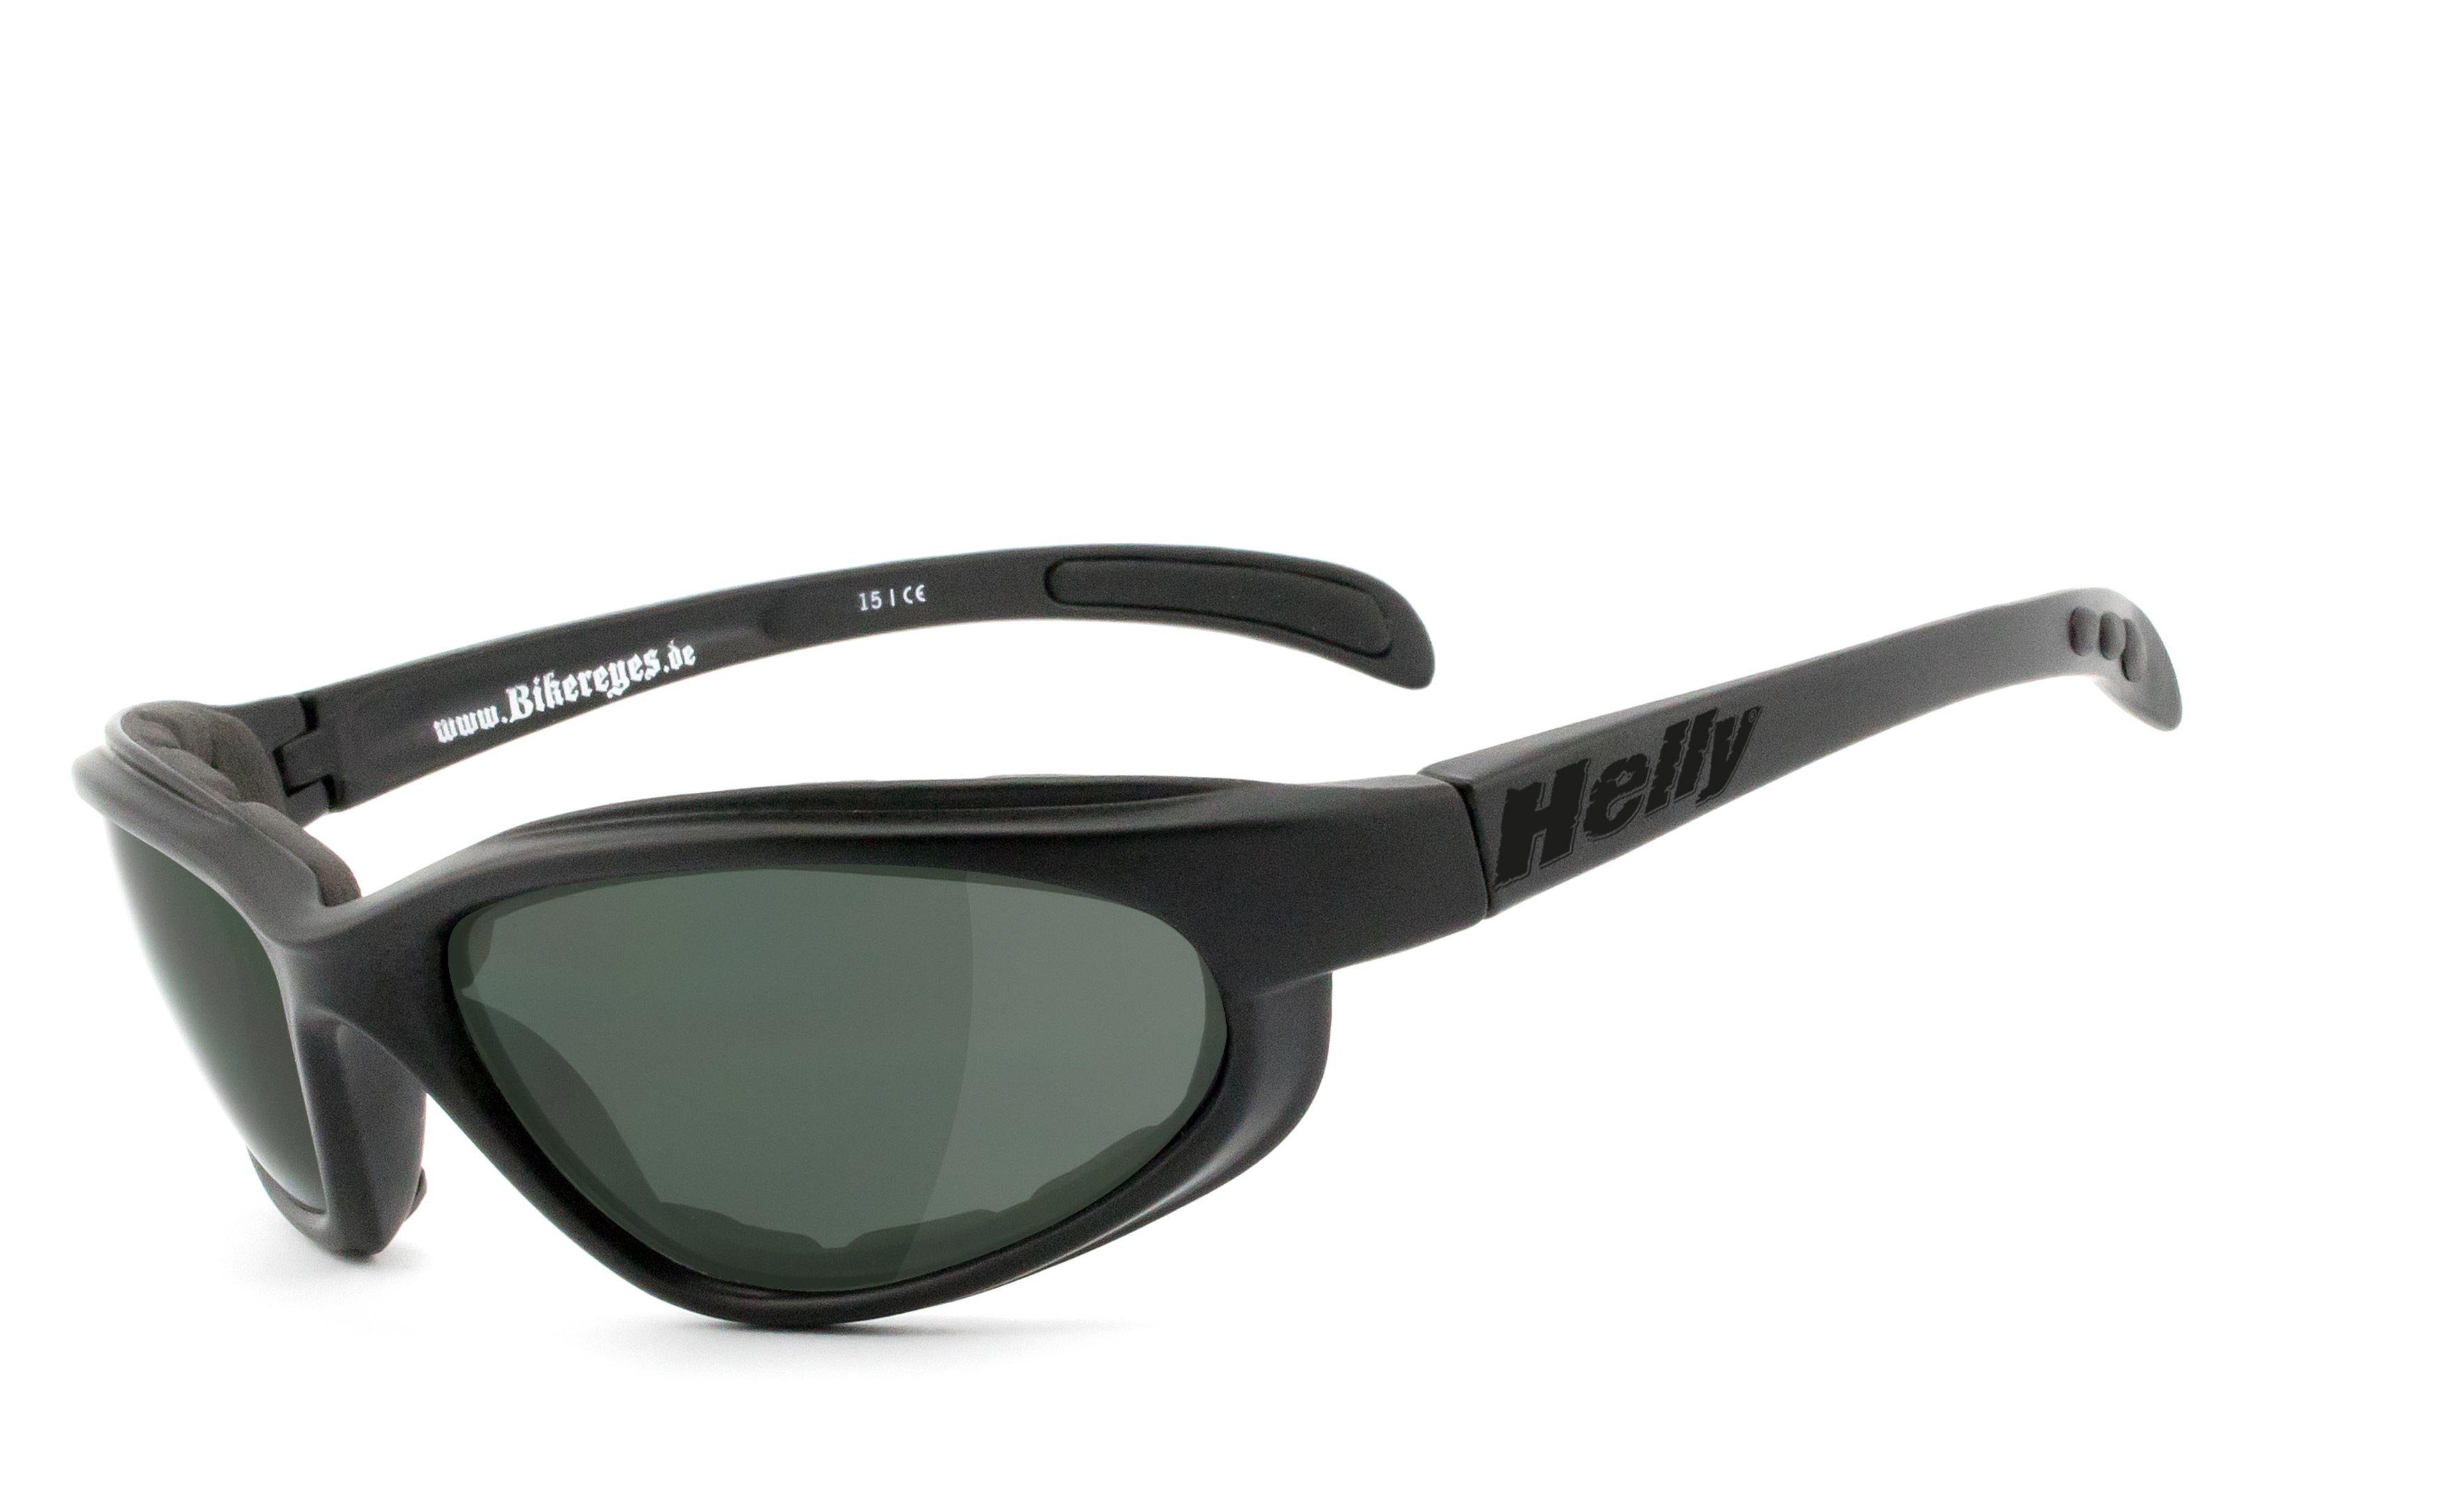 Helly - No.1 Bikereyes Motorradbrille thunder 2, polarisierende Gläser | Brillen